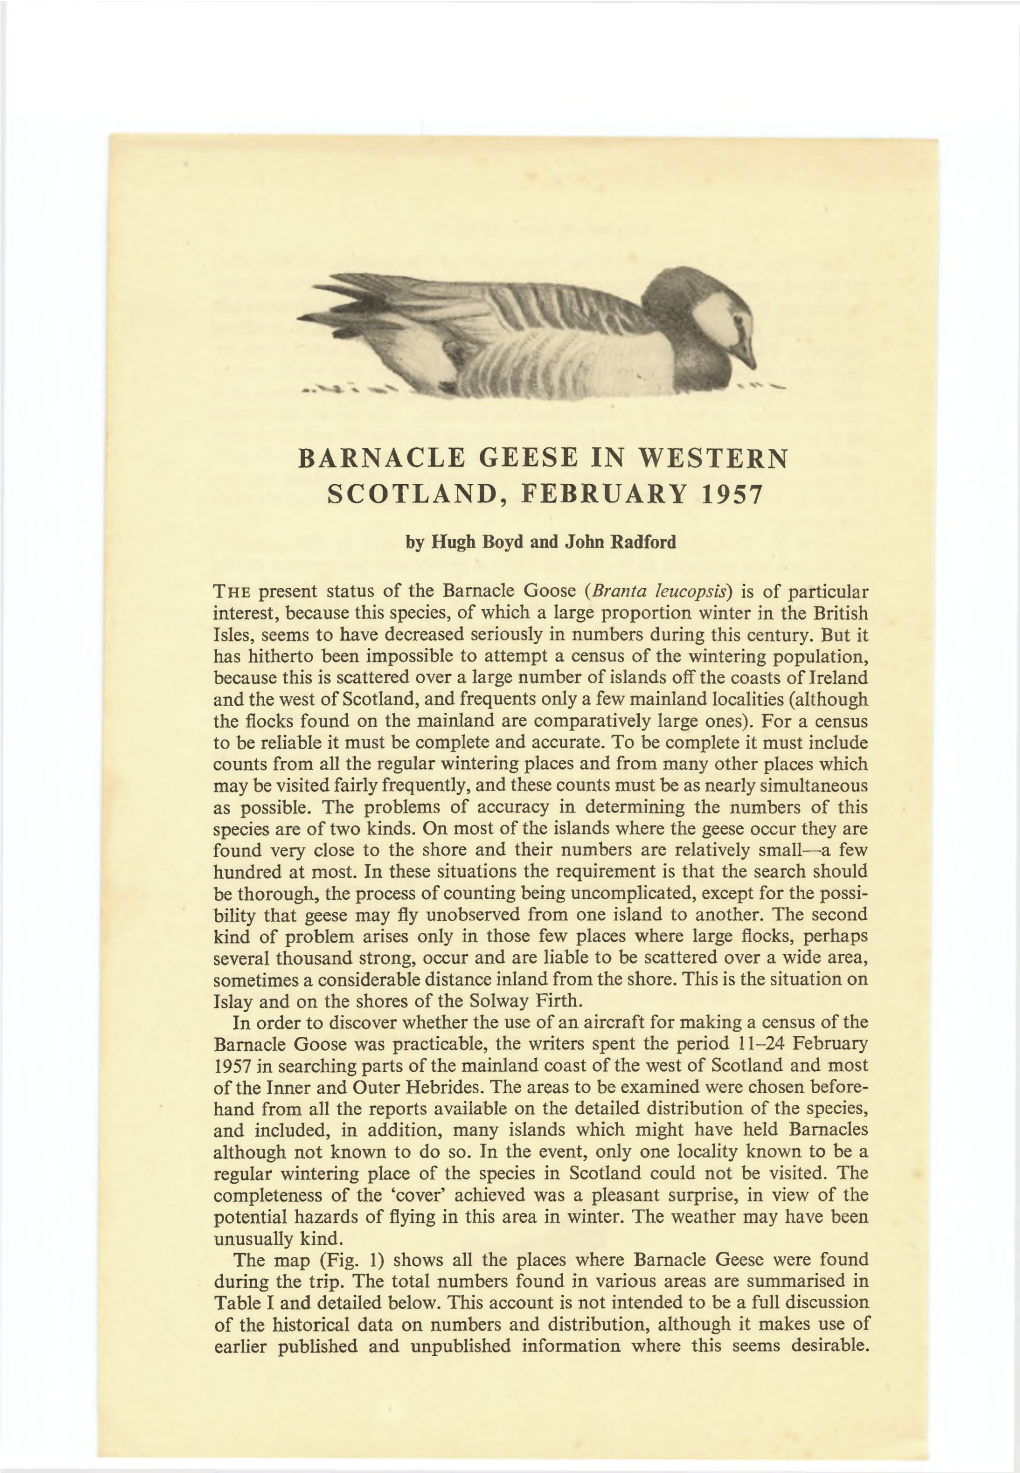 Barnacle Geese in Western Scotland, February 1957